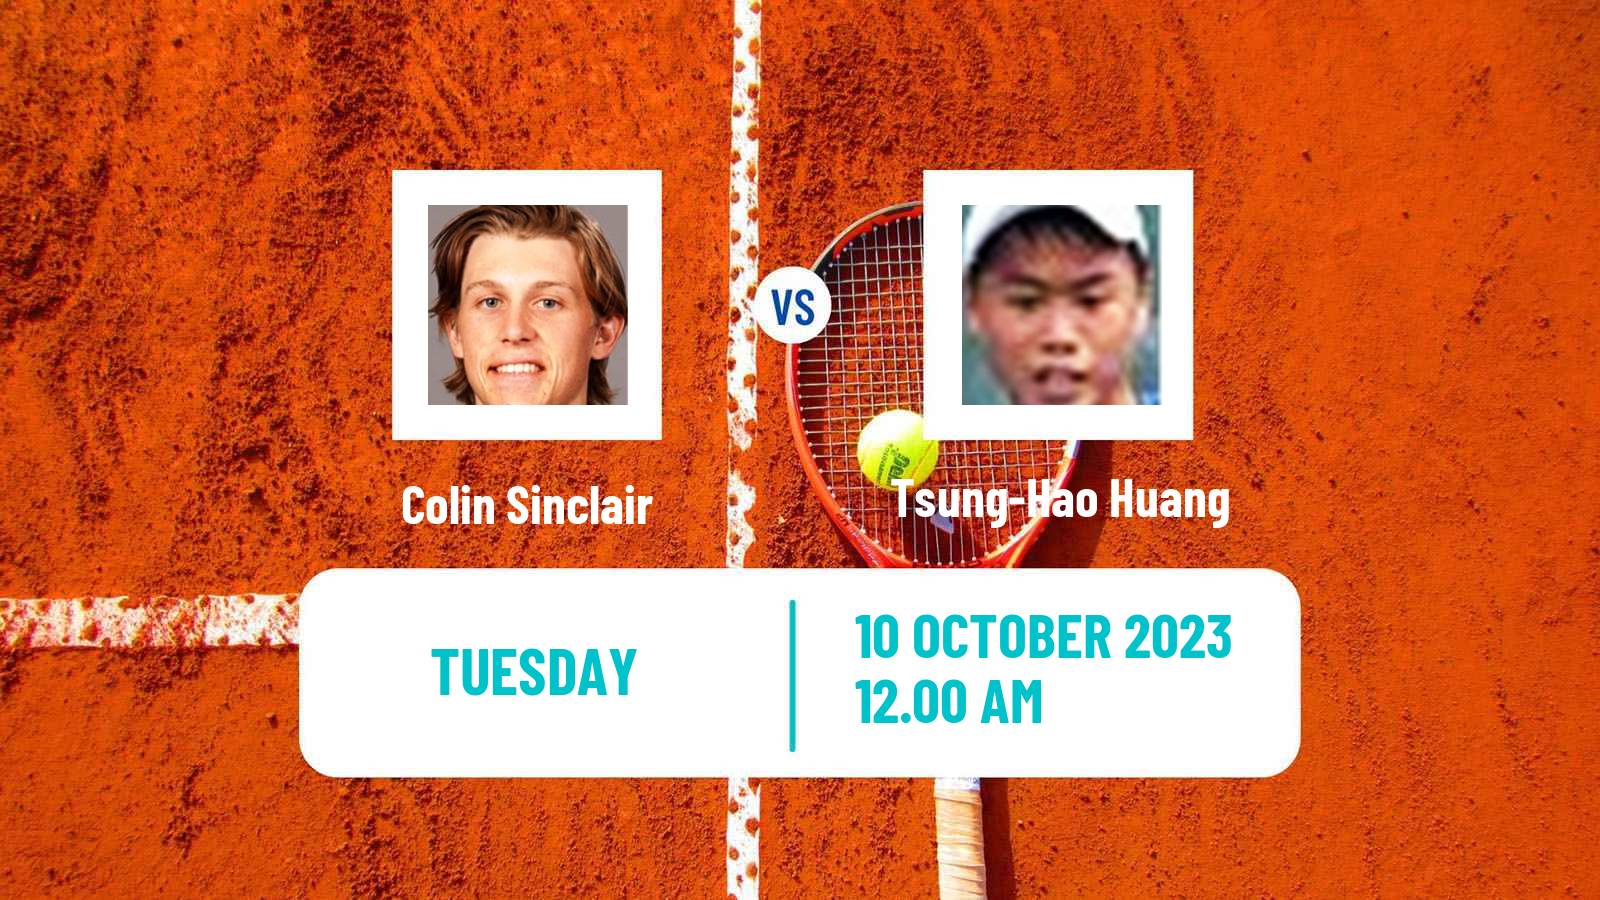 Tennis Shenzhen 2 Challenger Men Colin Sinclair - Tsung-Hao Huang